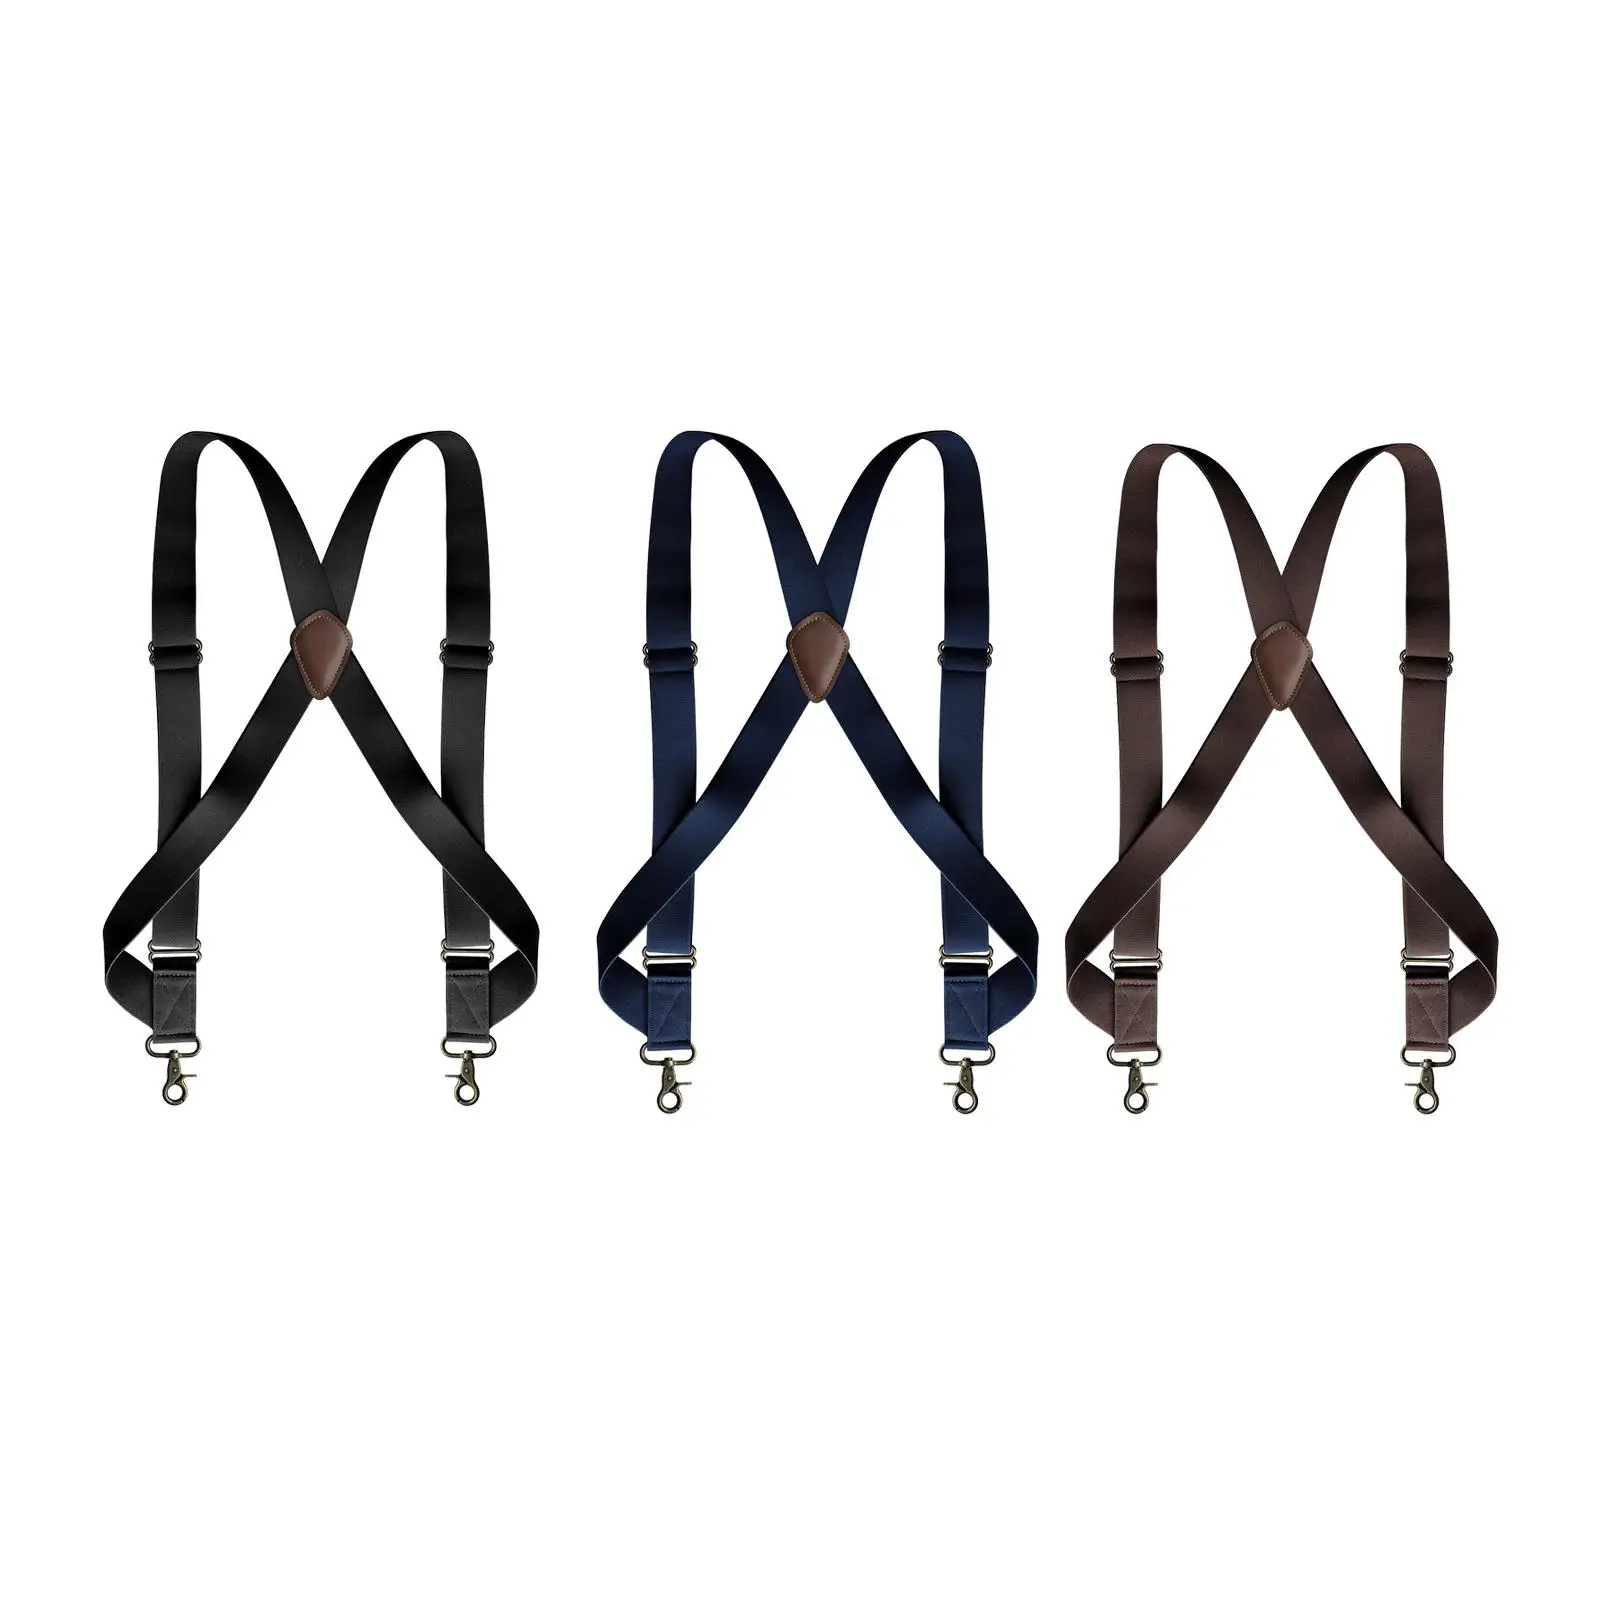 Suspenders for Men, Adjustable Suspenders with Elastic Straps, X Type Construction for Work